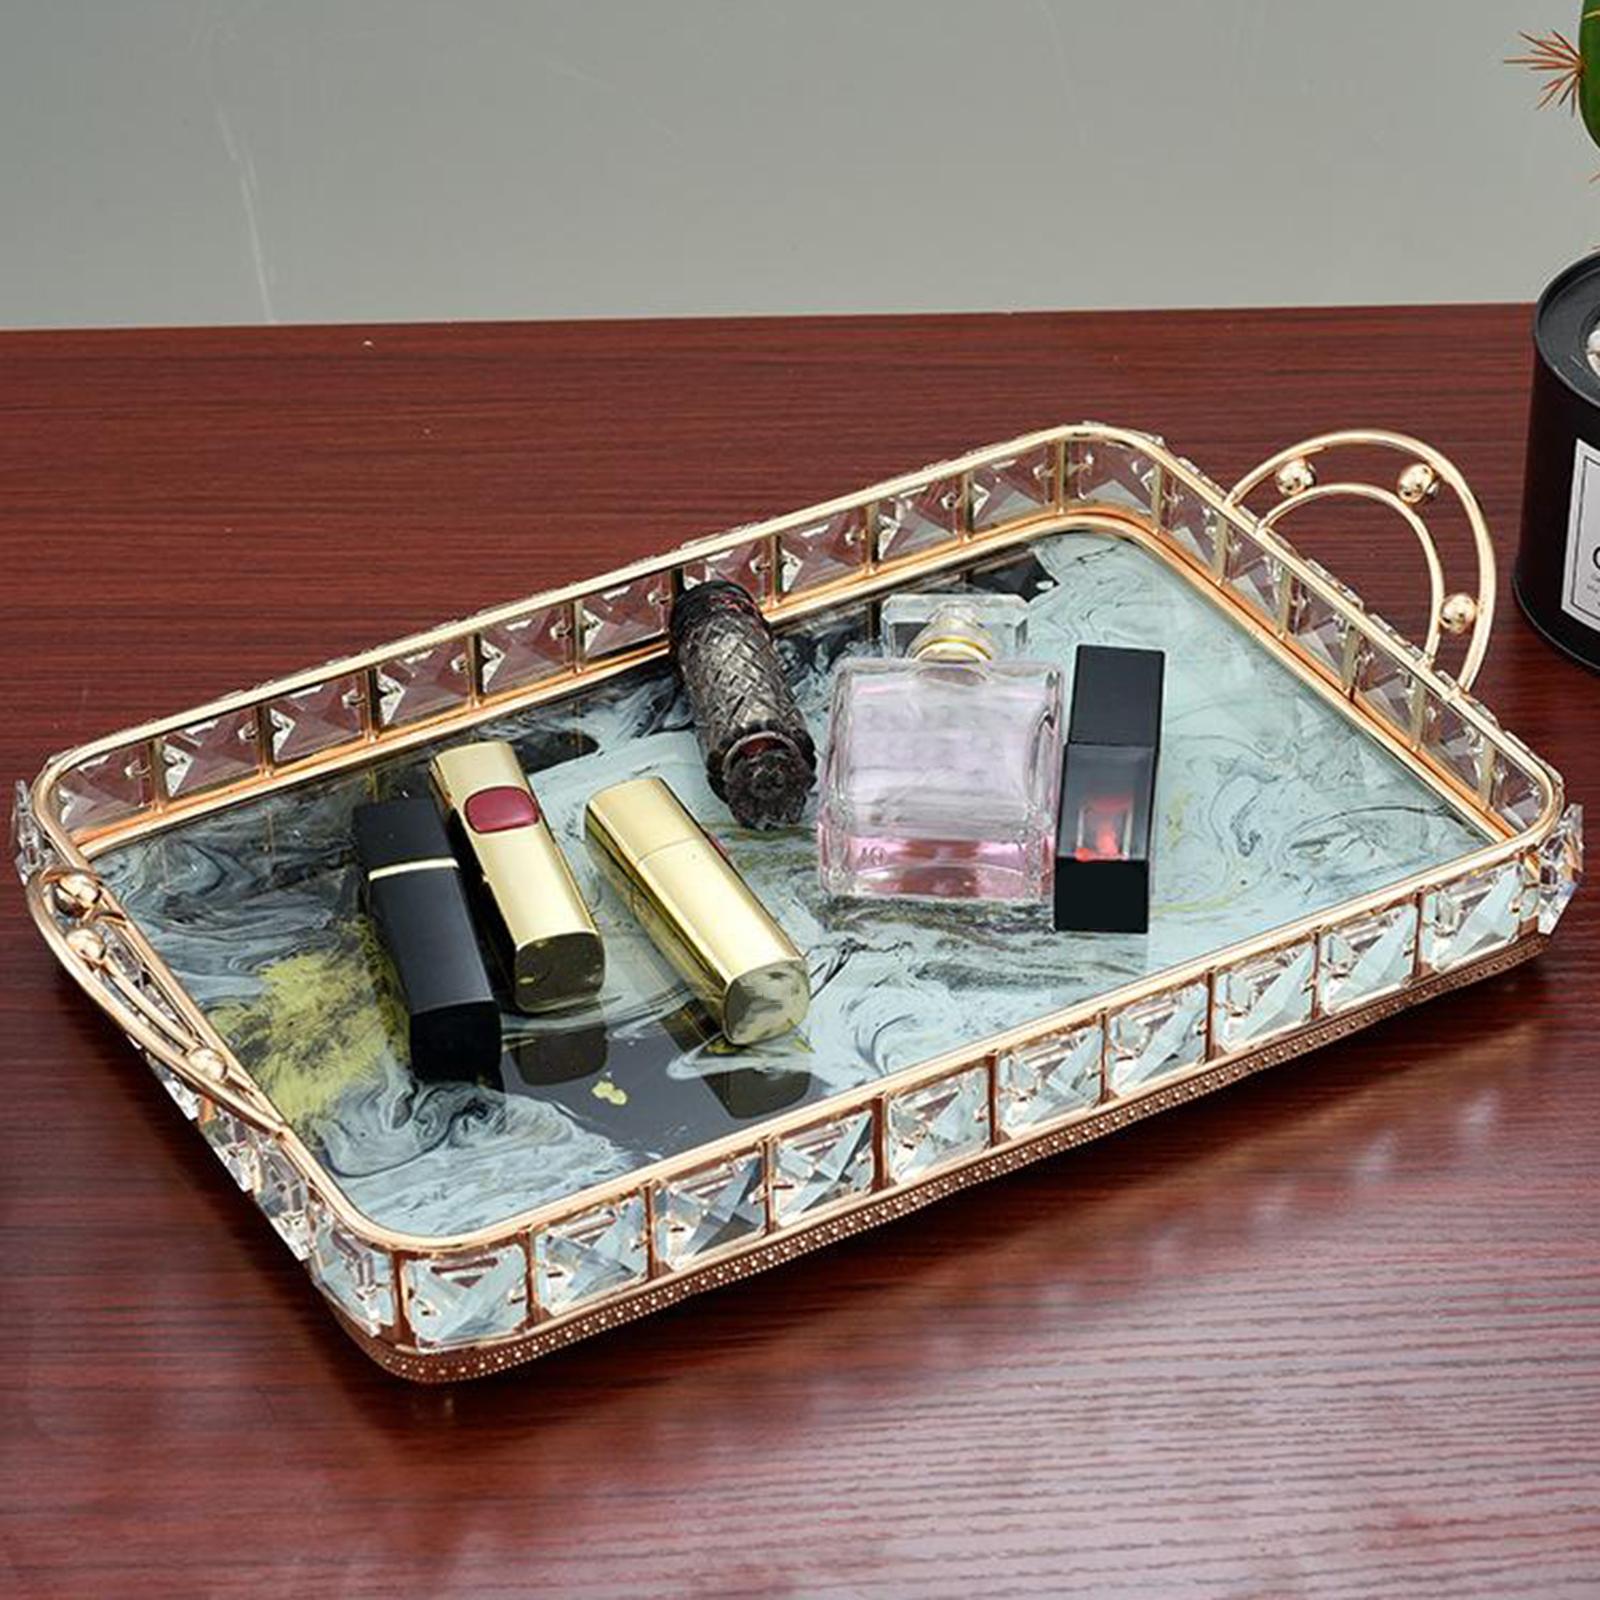 Crystal Cosmetic Makeup Tray - Vanity Jewelry Decorative Tray Organizer for Storage Perfume, Toiletries,Trinket, Home Decor Tray for Dresser, Bathroom